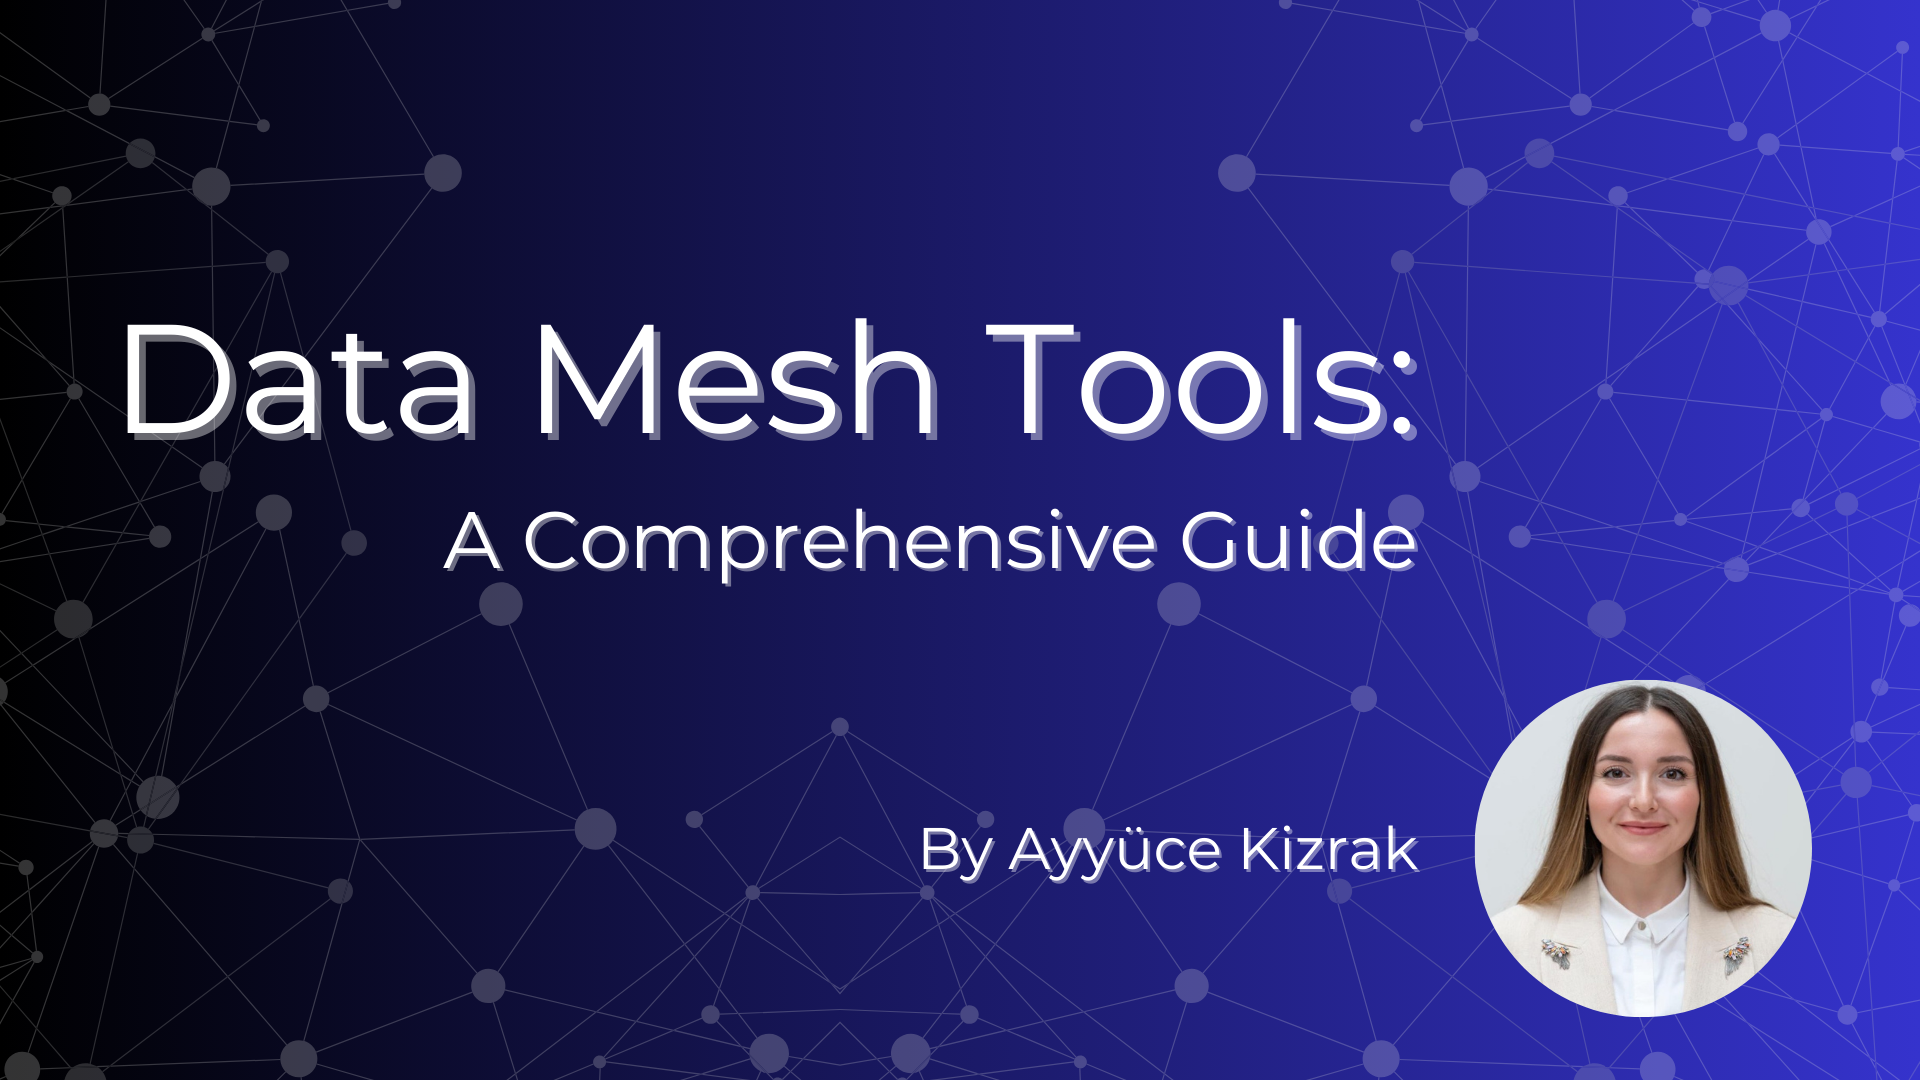 Data Mesh Tools: A Comprehensive Guide by Ayyuce Kizrak